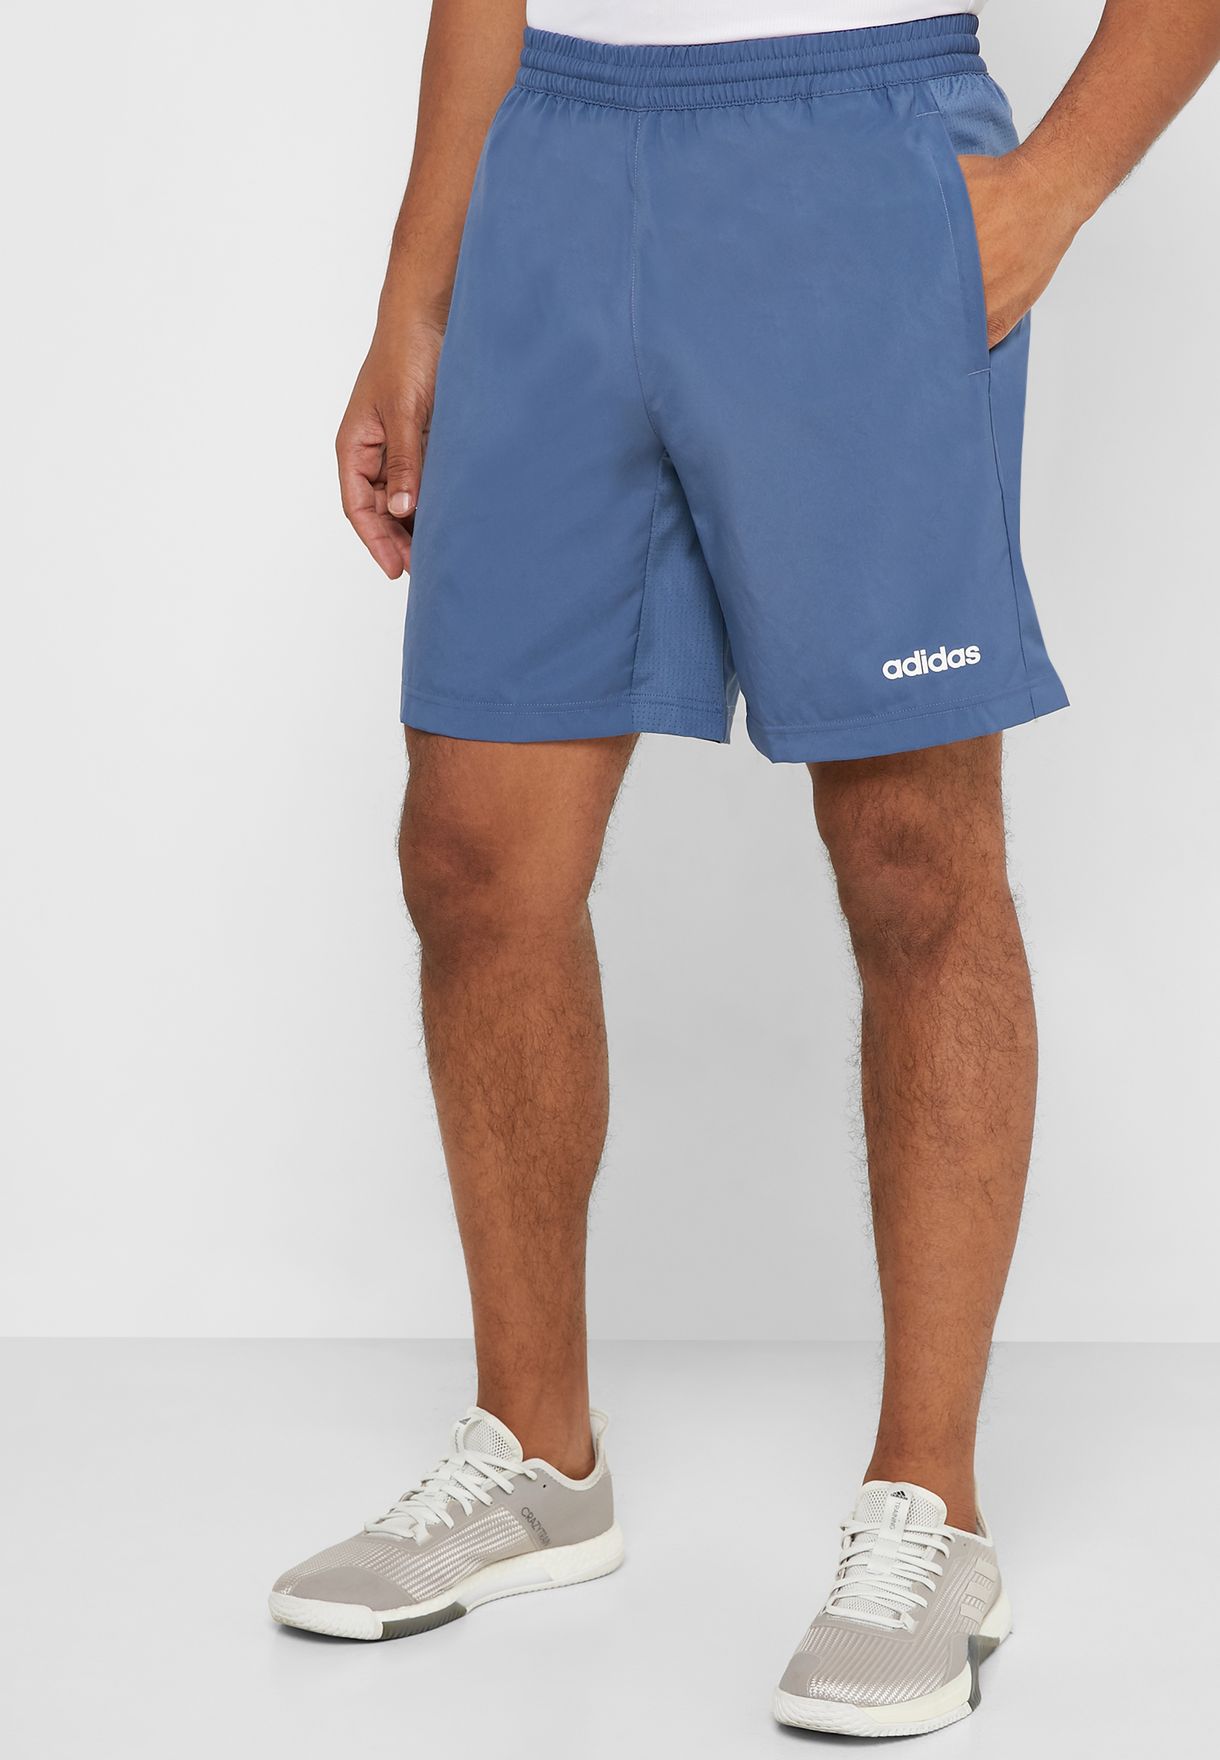 climacool shorts adidas originals